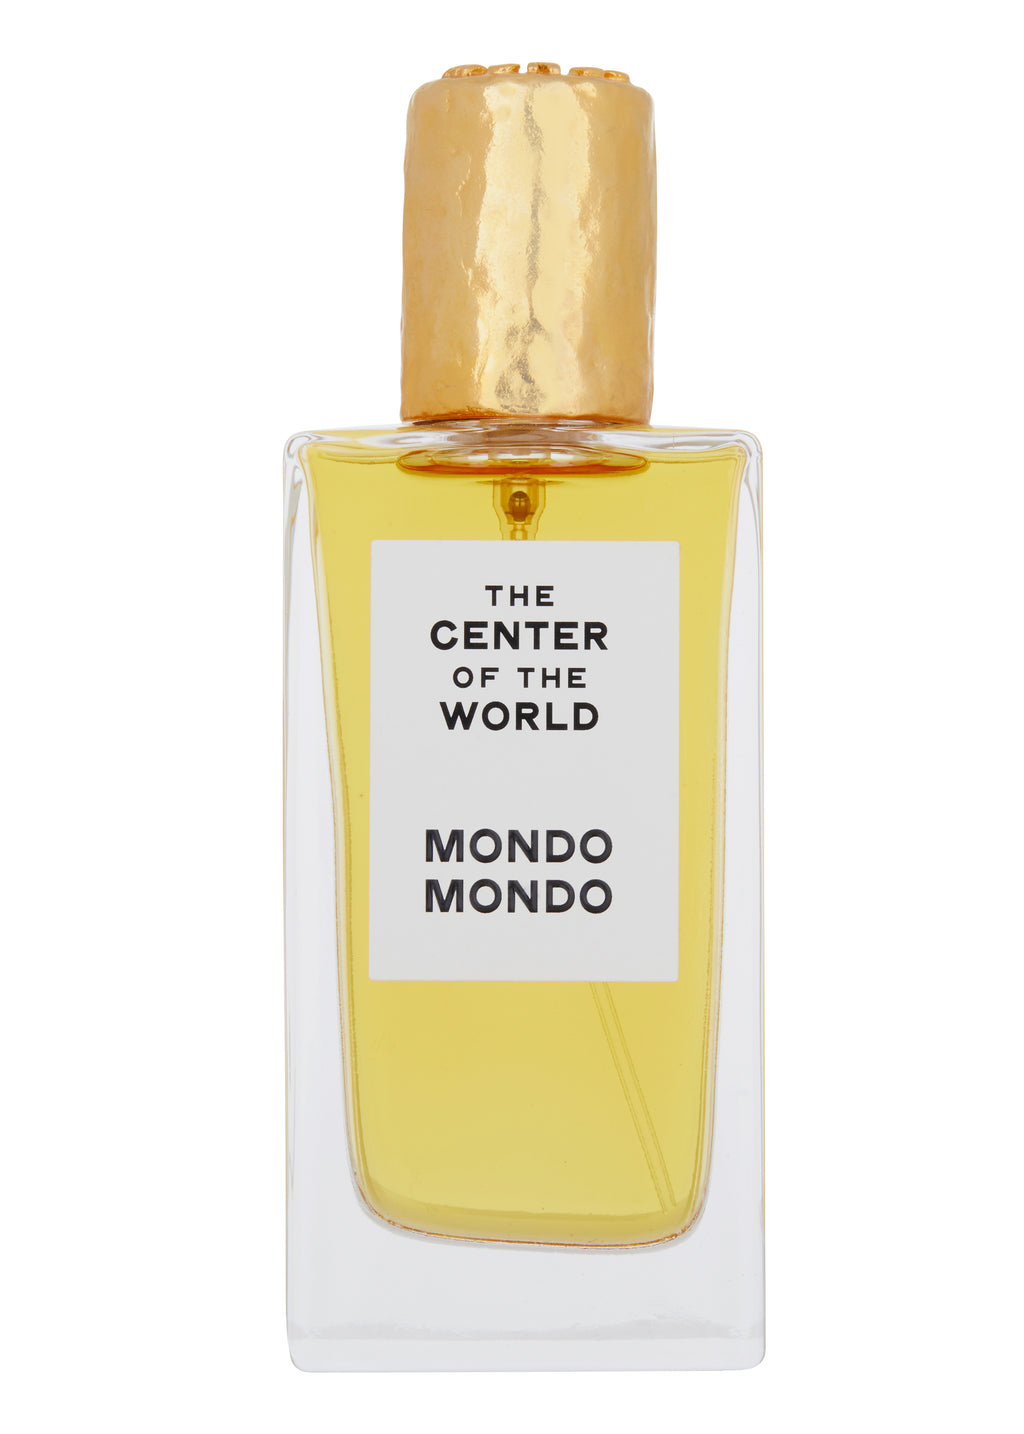 Mondo – Taste the world.